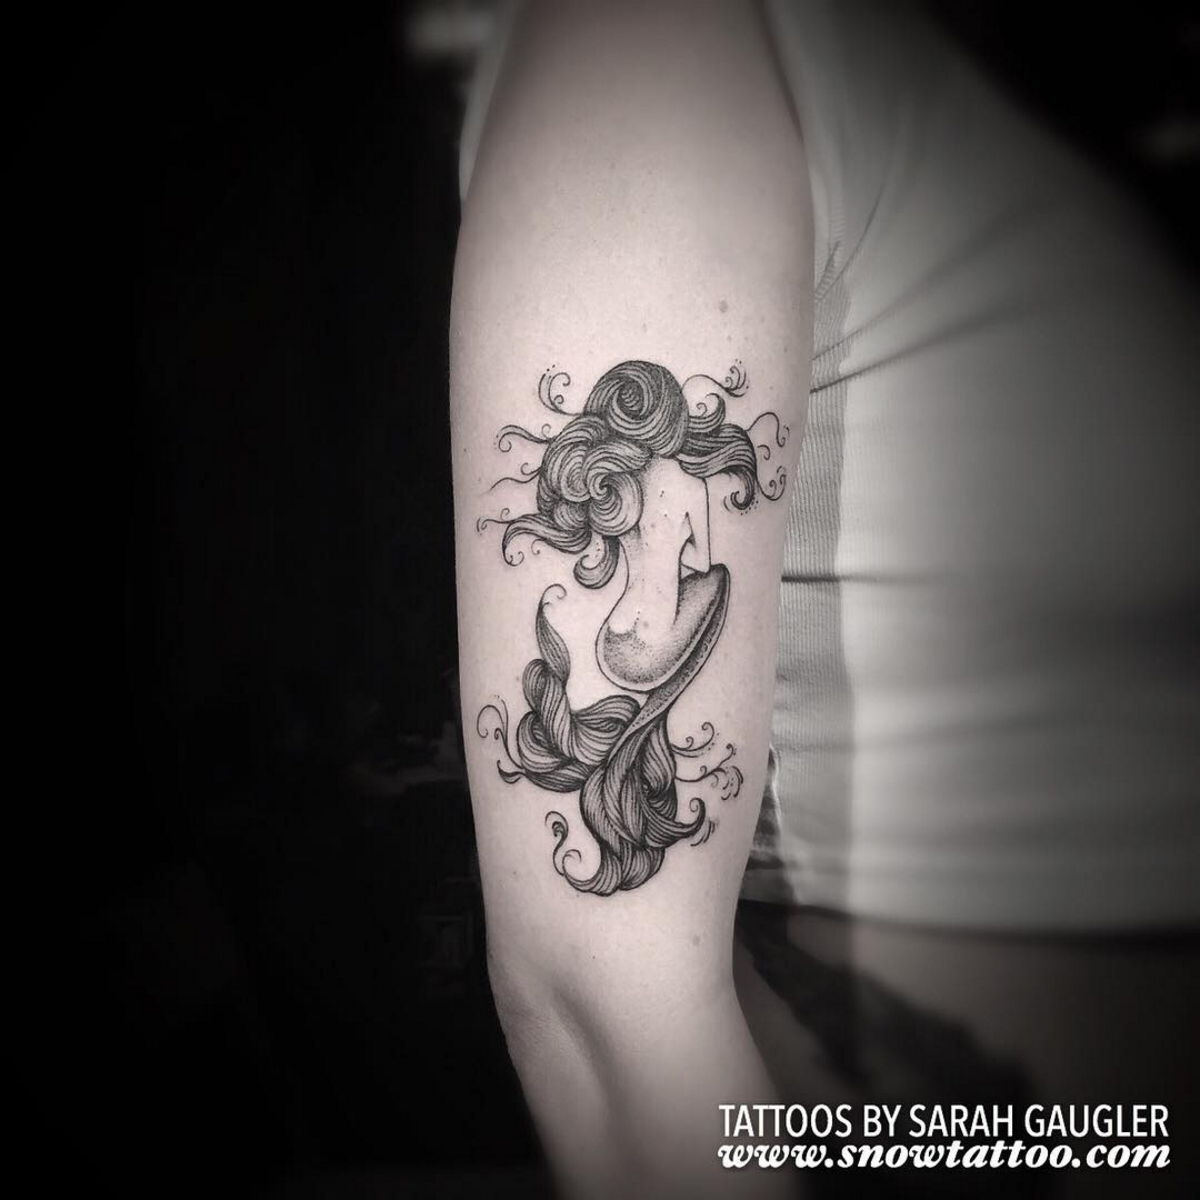 Sarah Gaugler Snow Tattoo Custom Signature Mermaid New York Best Tattoos Best Tattoo Artist NYC SarahgauglerMermaid.png